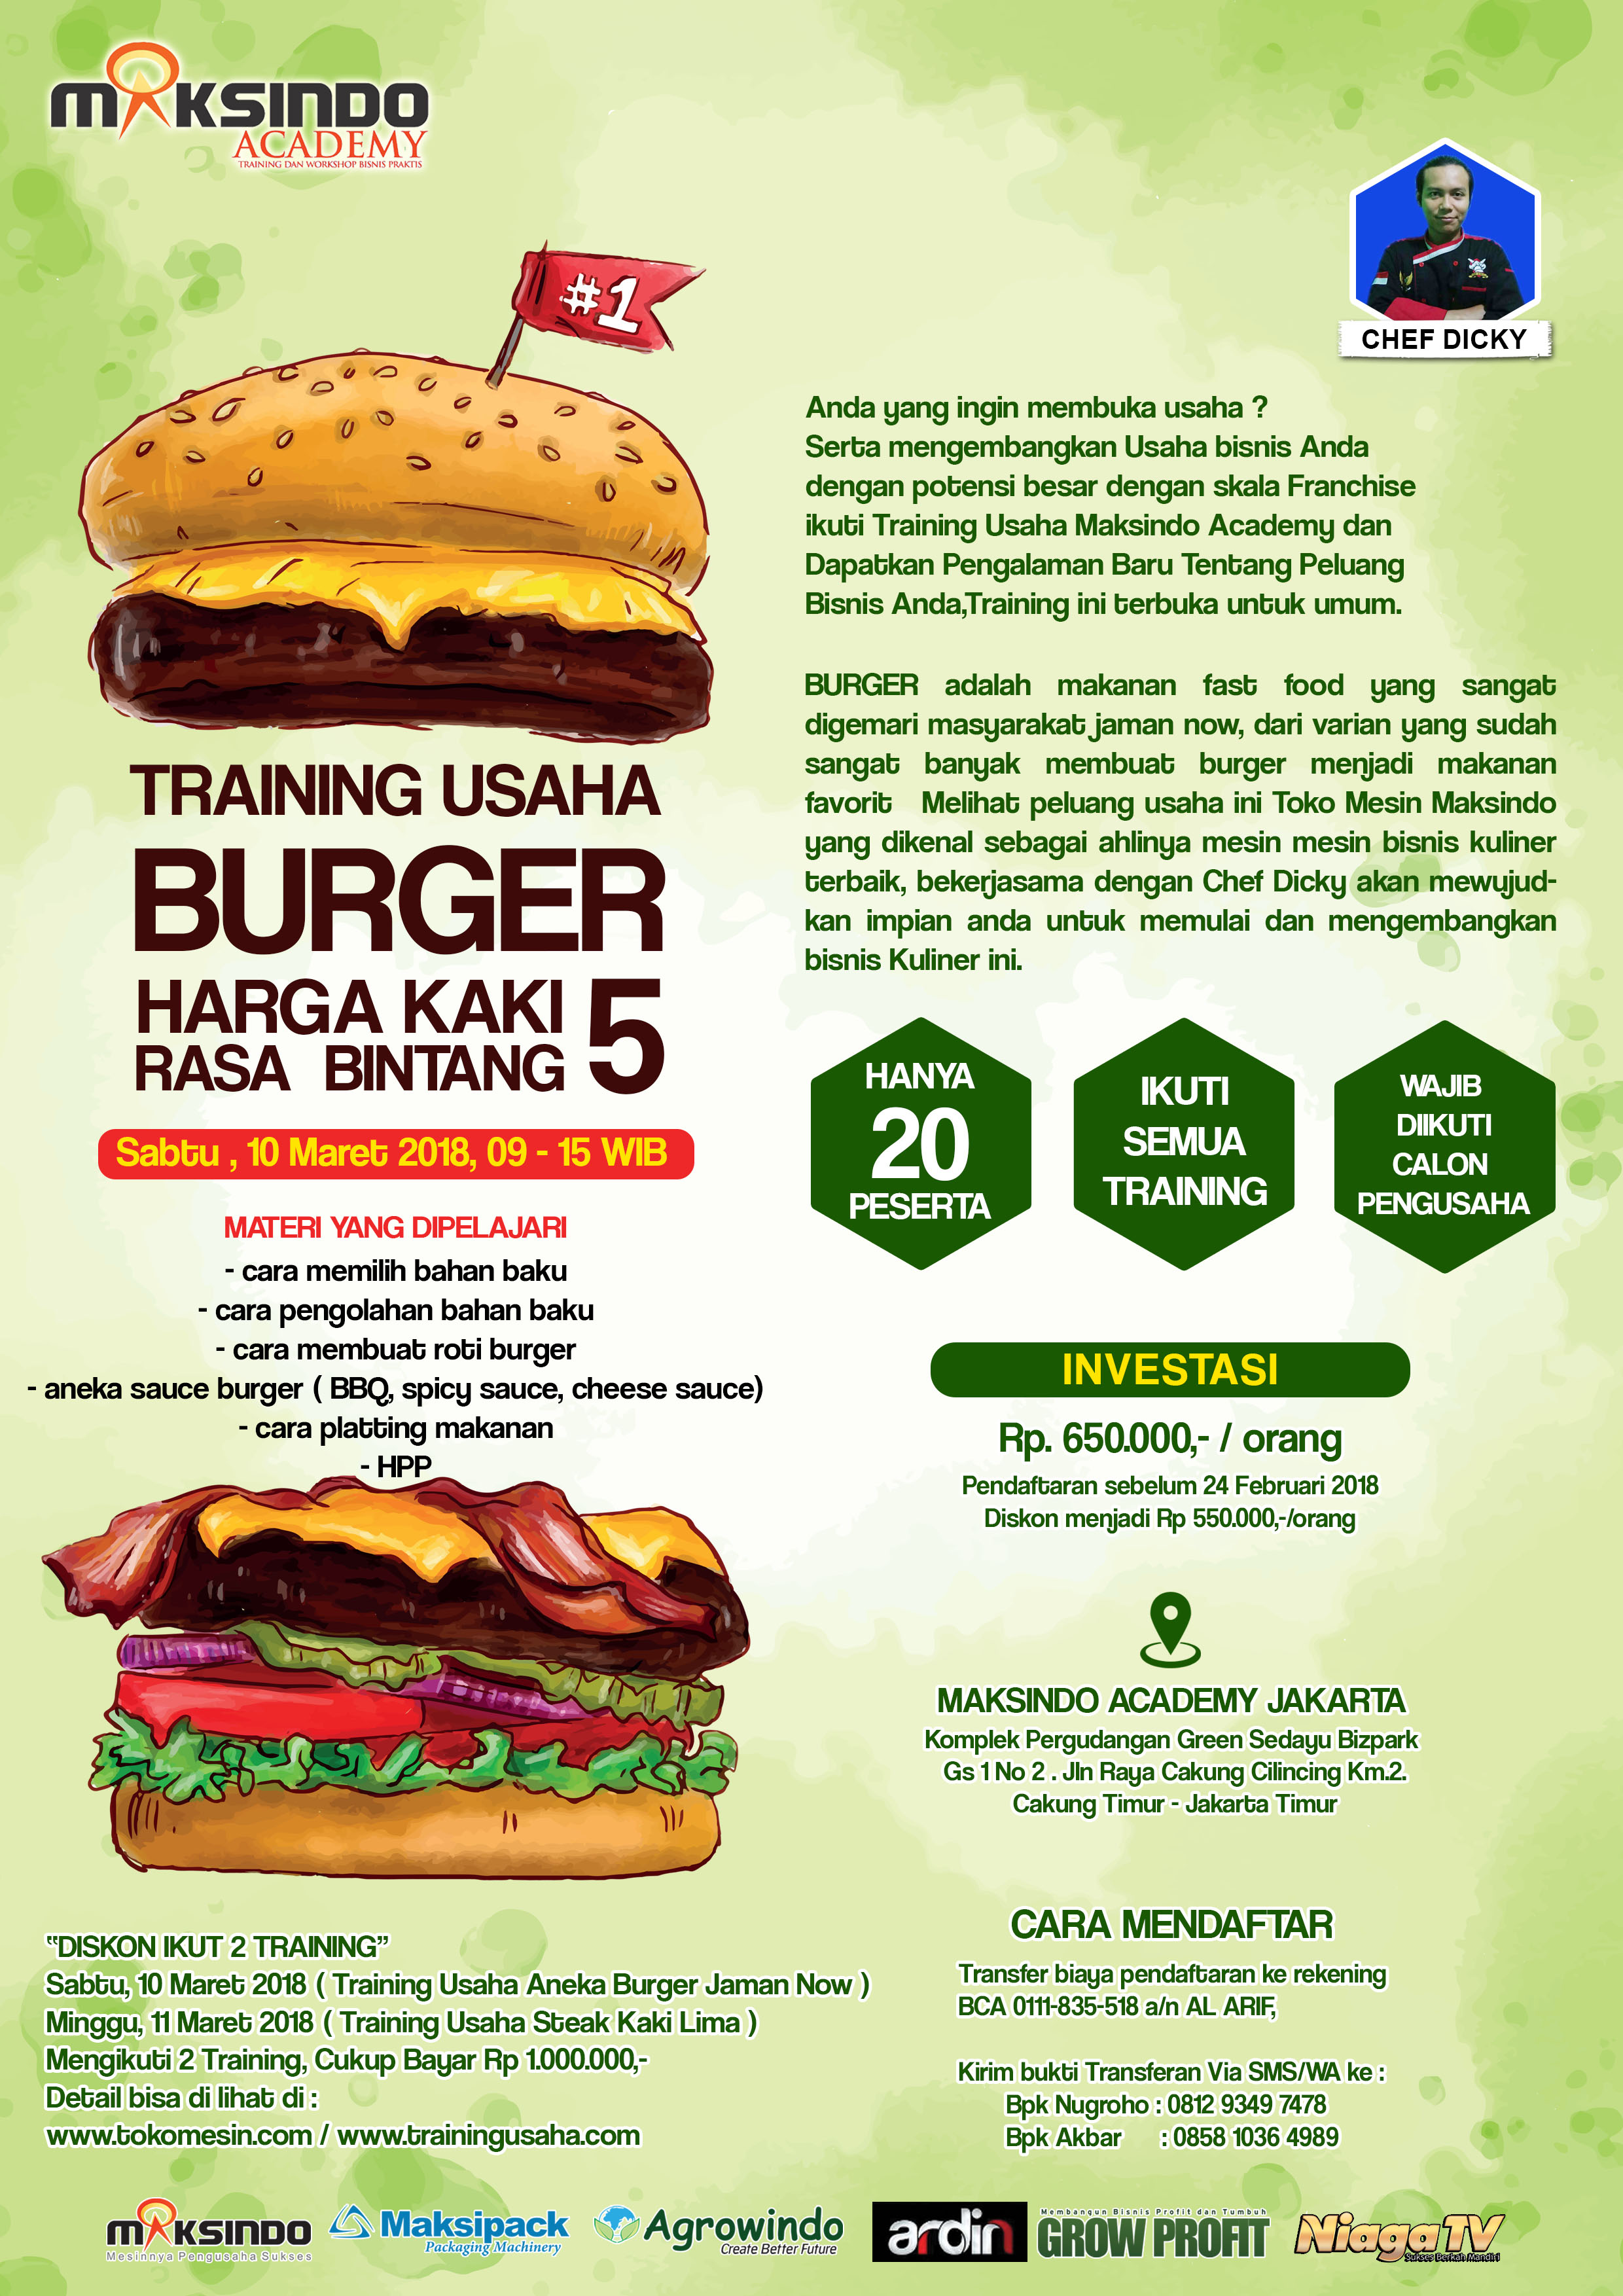 Training Usaha Burger, 10 Maret 2018